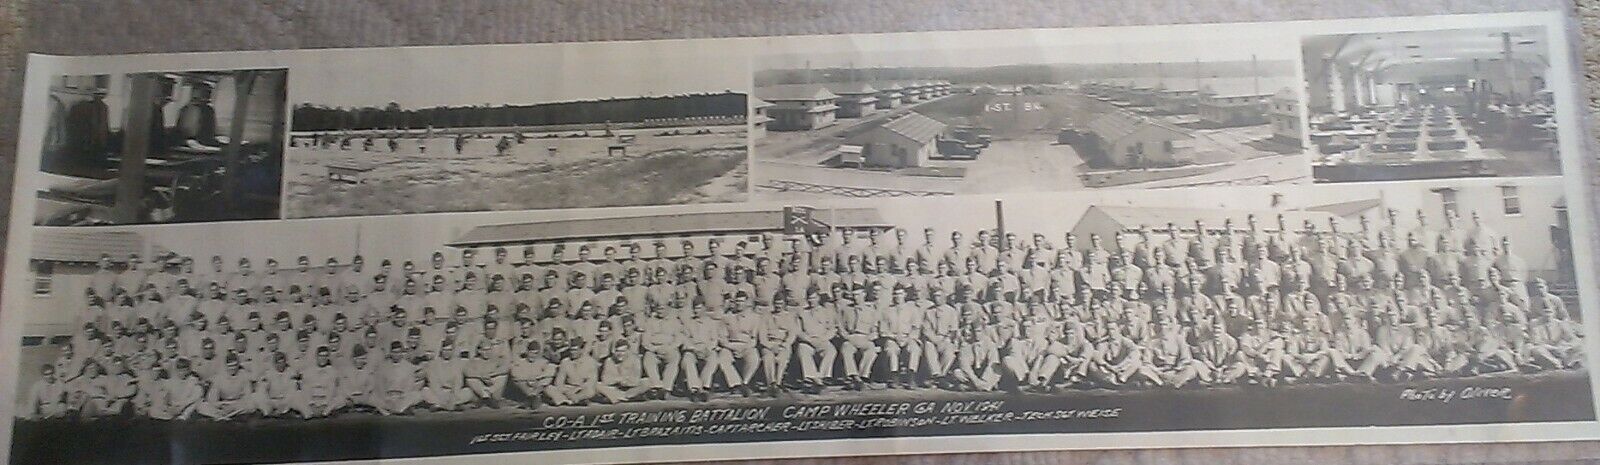 1941 Panoramic Photo - Camp Wheeler GA Co. A 1st Training Batt. NAMES IN LISTING